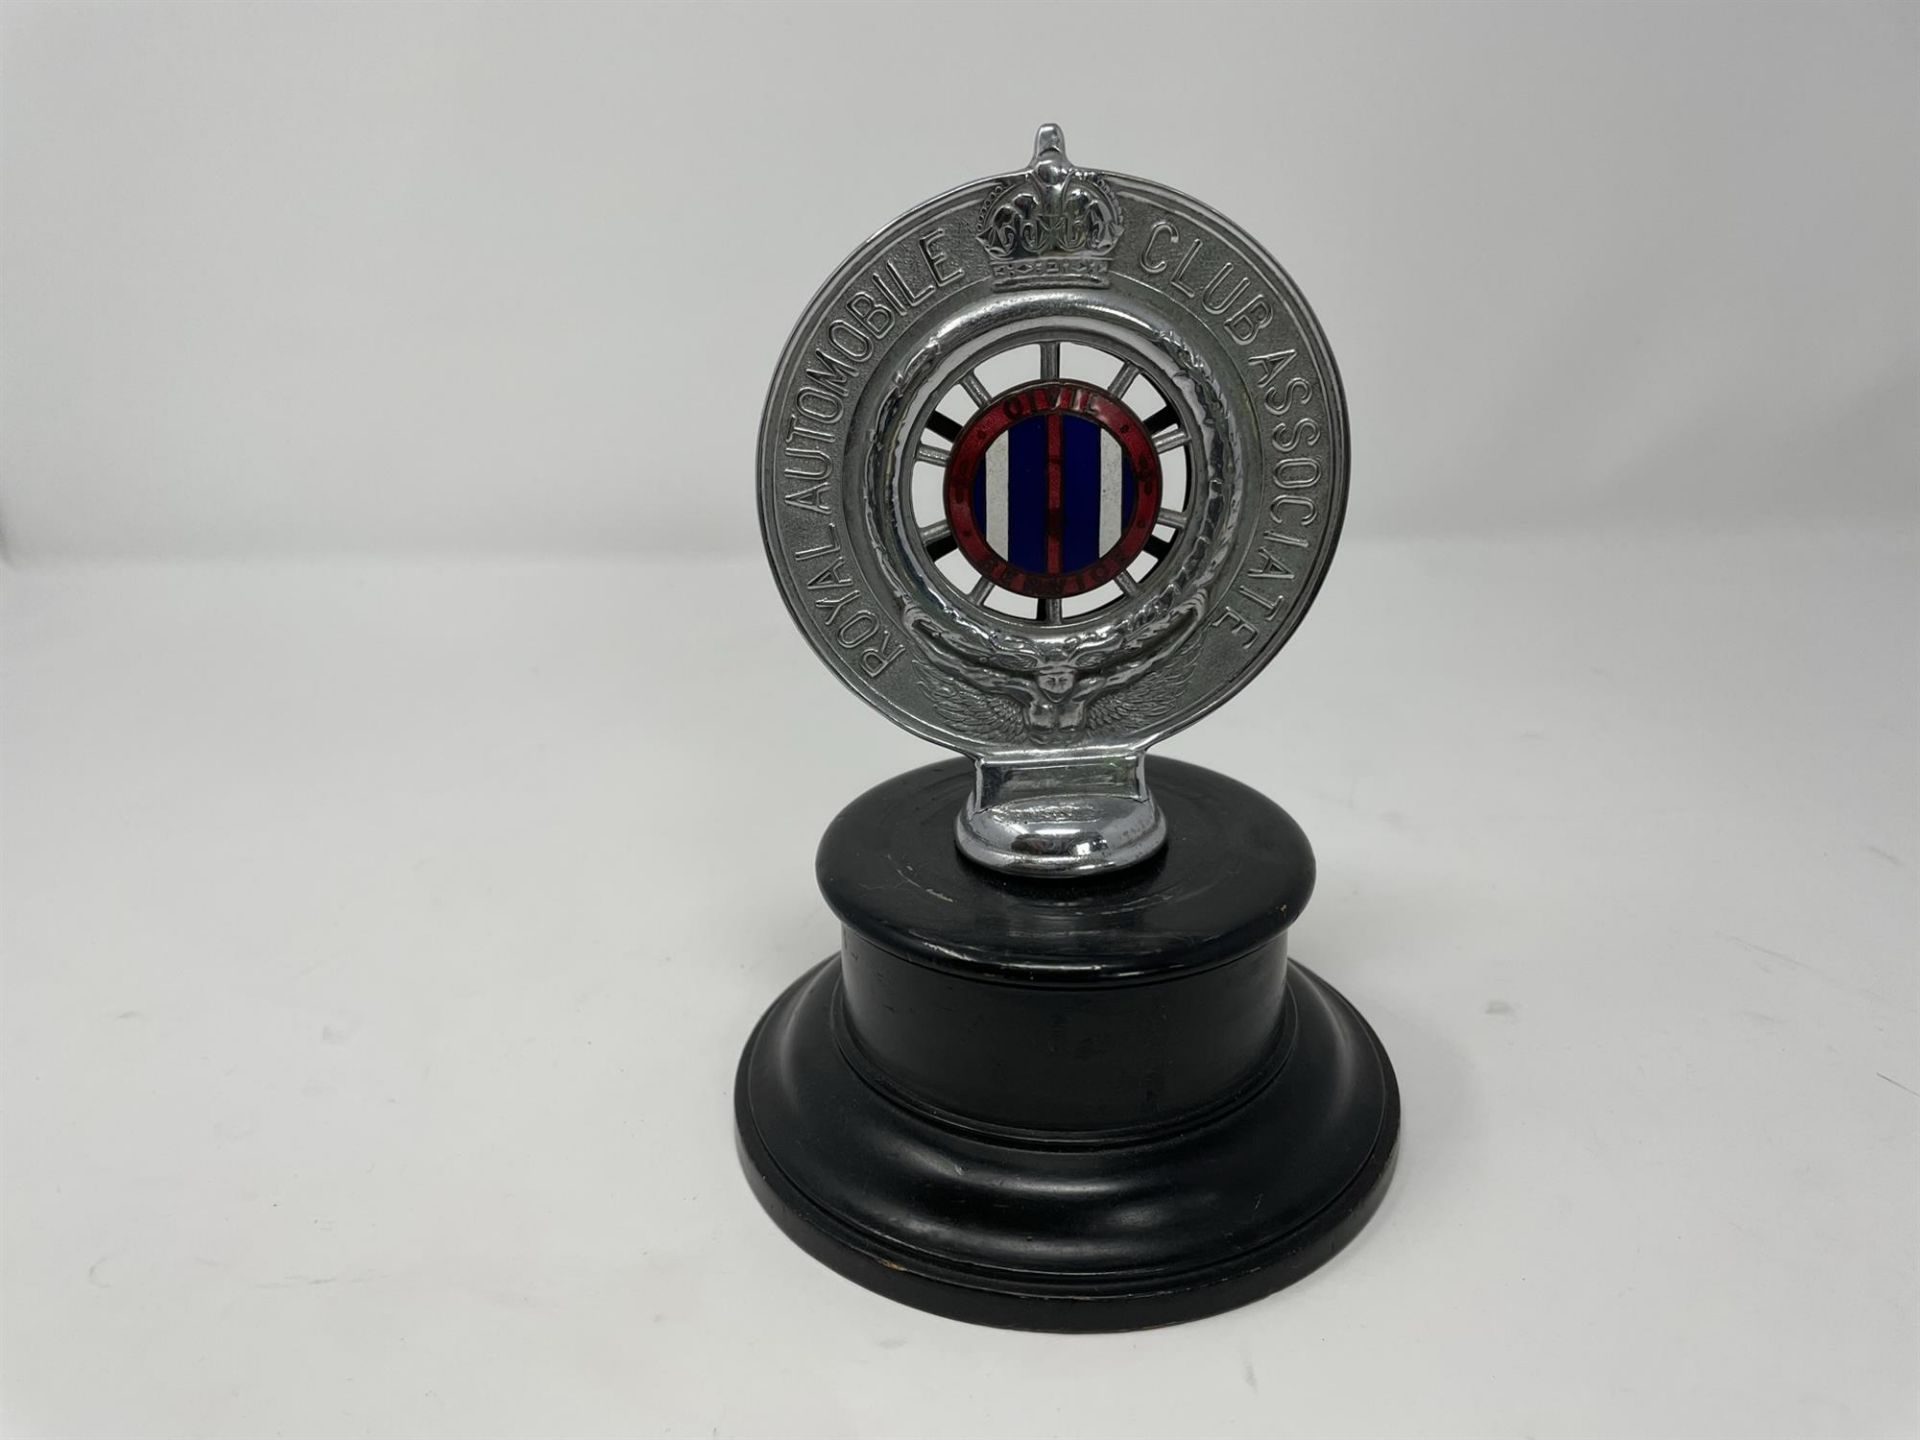 Royal Automobile Club Civil Service Badge - Image 3 of 4